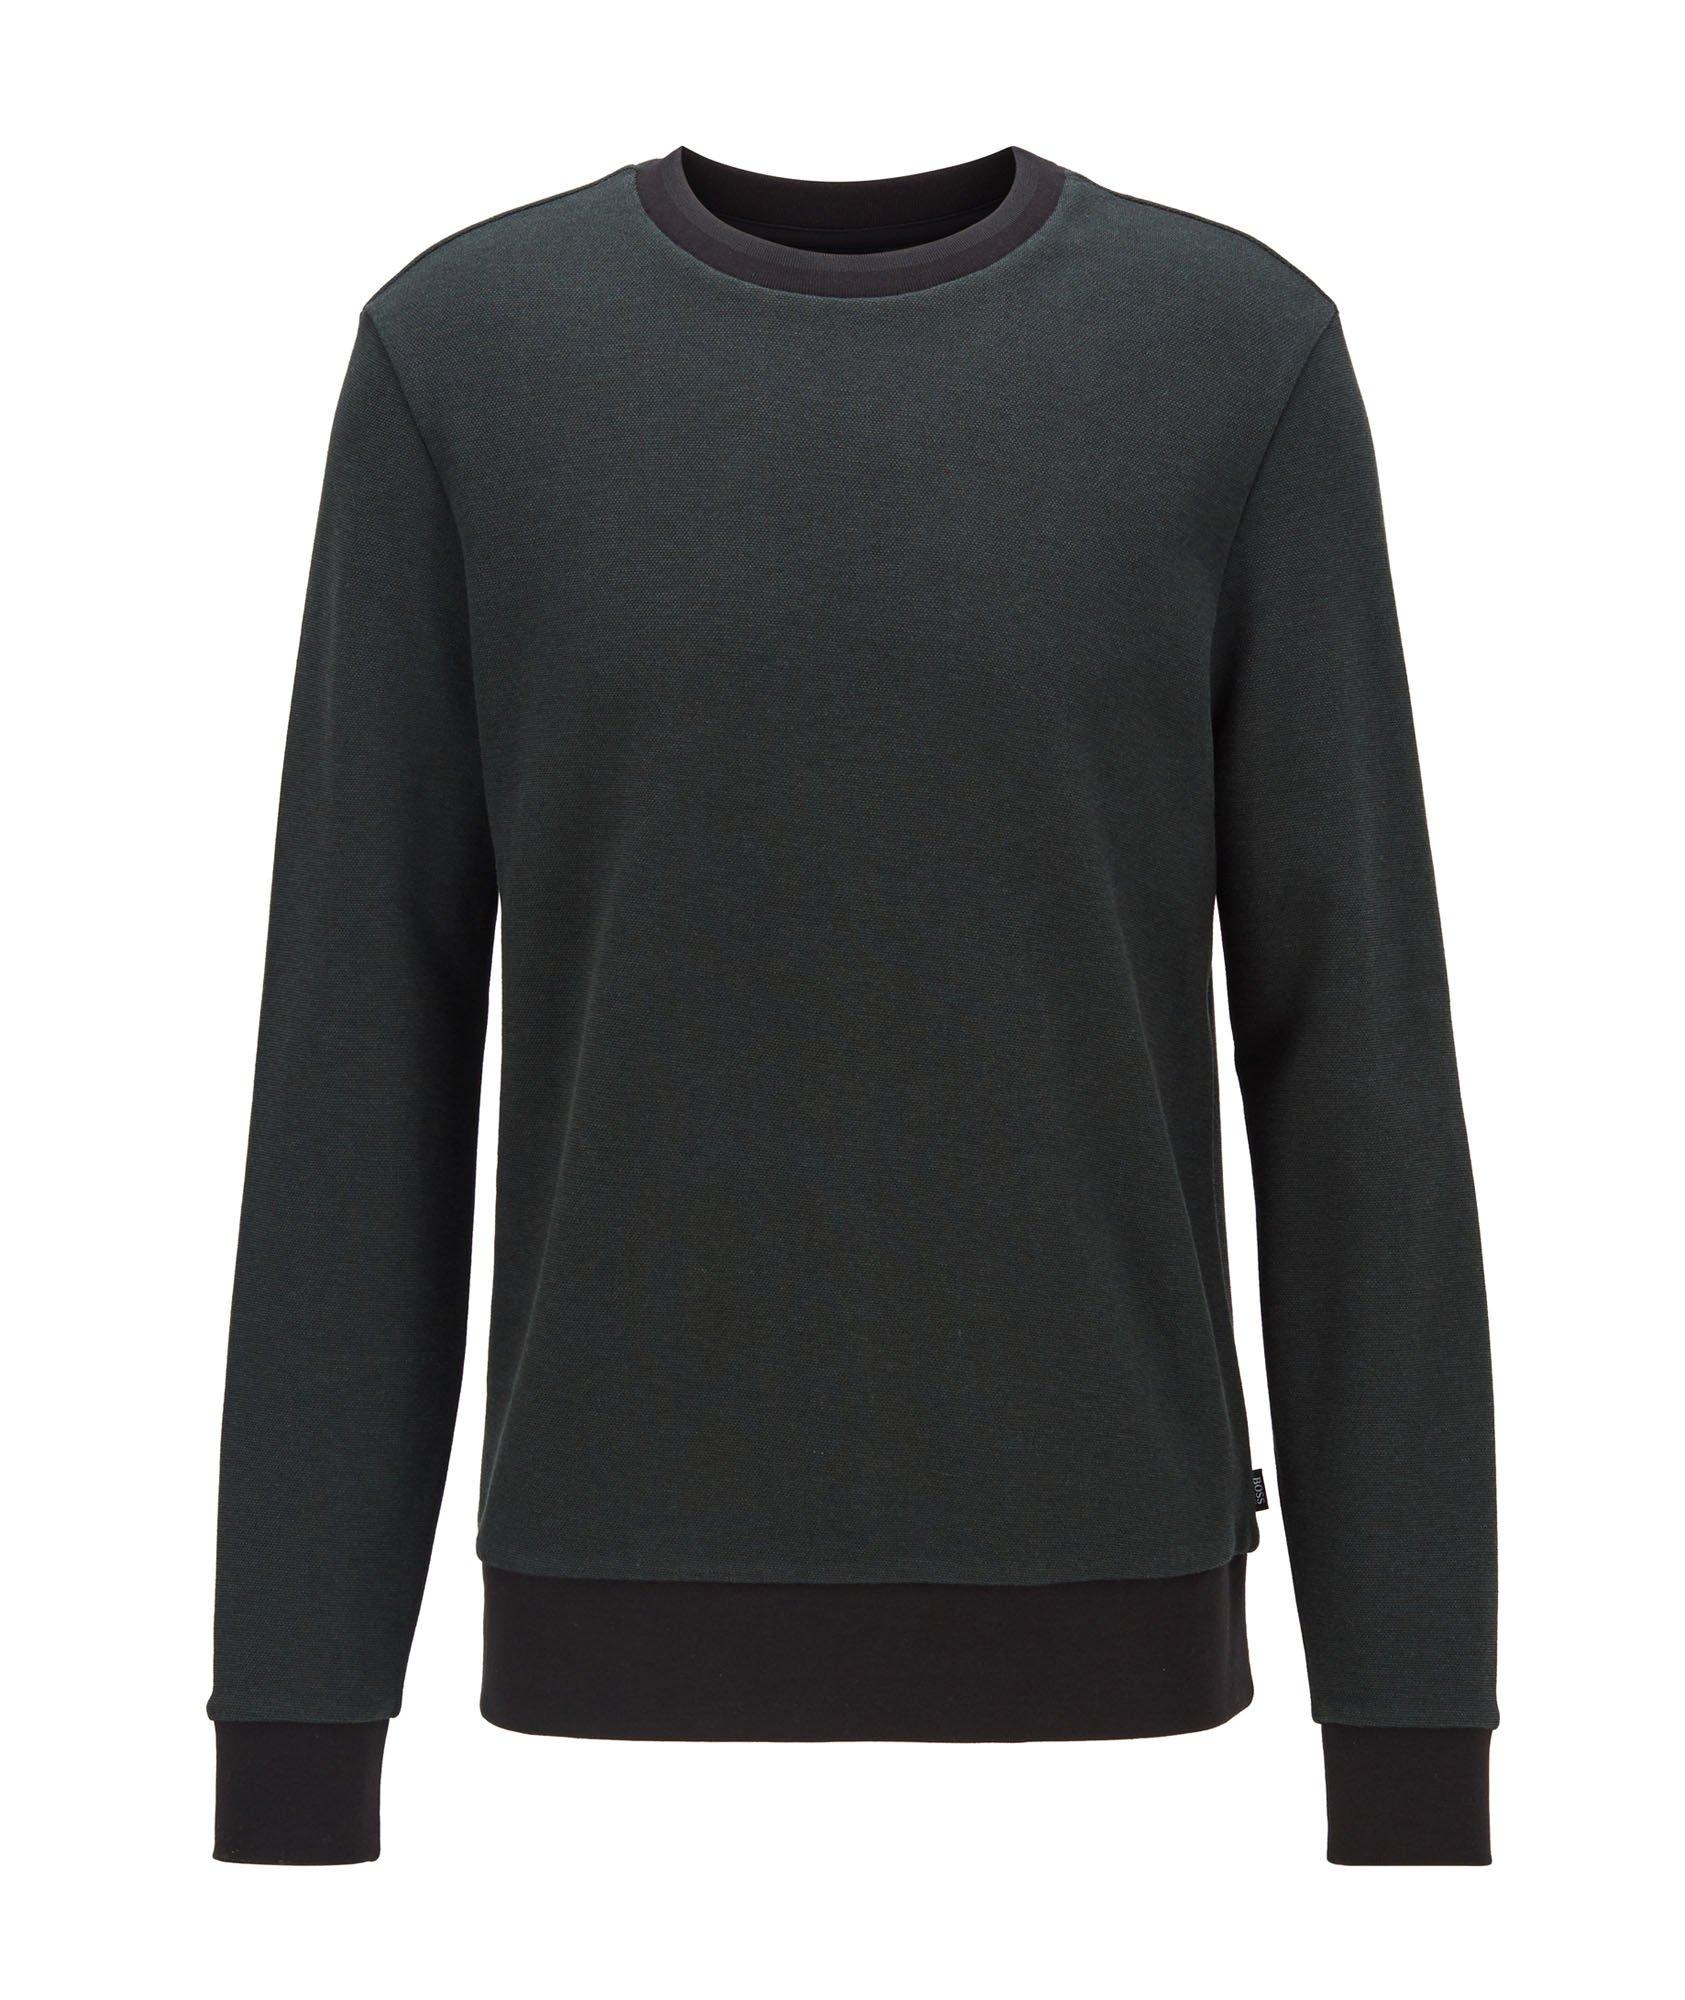 Cotton-Blend Sweatshirt image 0